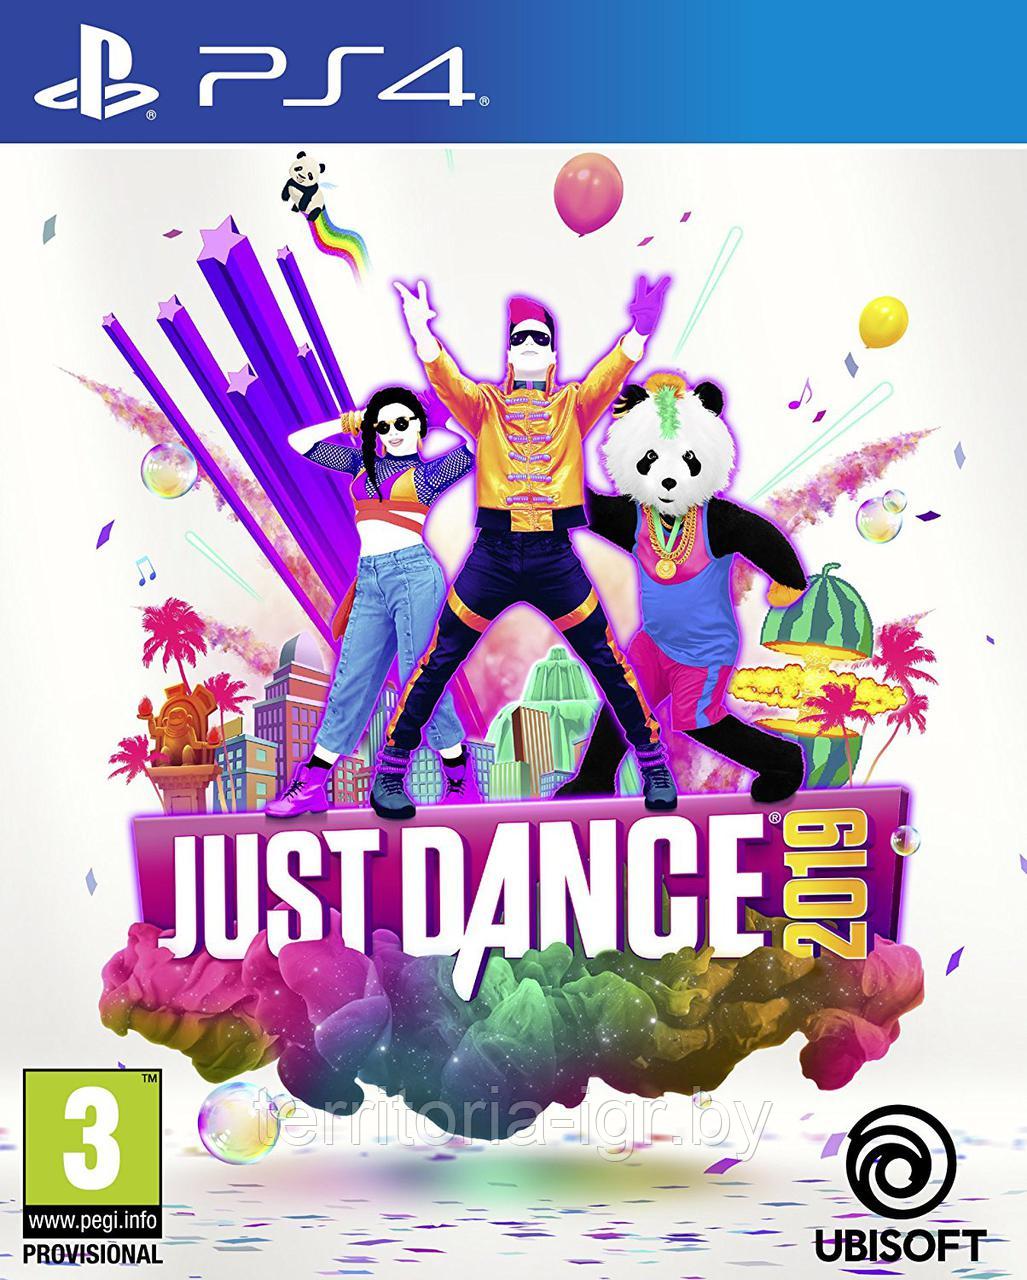 Just Dance 2019 Sony PS4 (Русская версия)